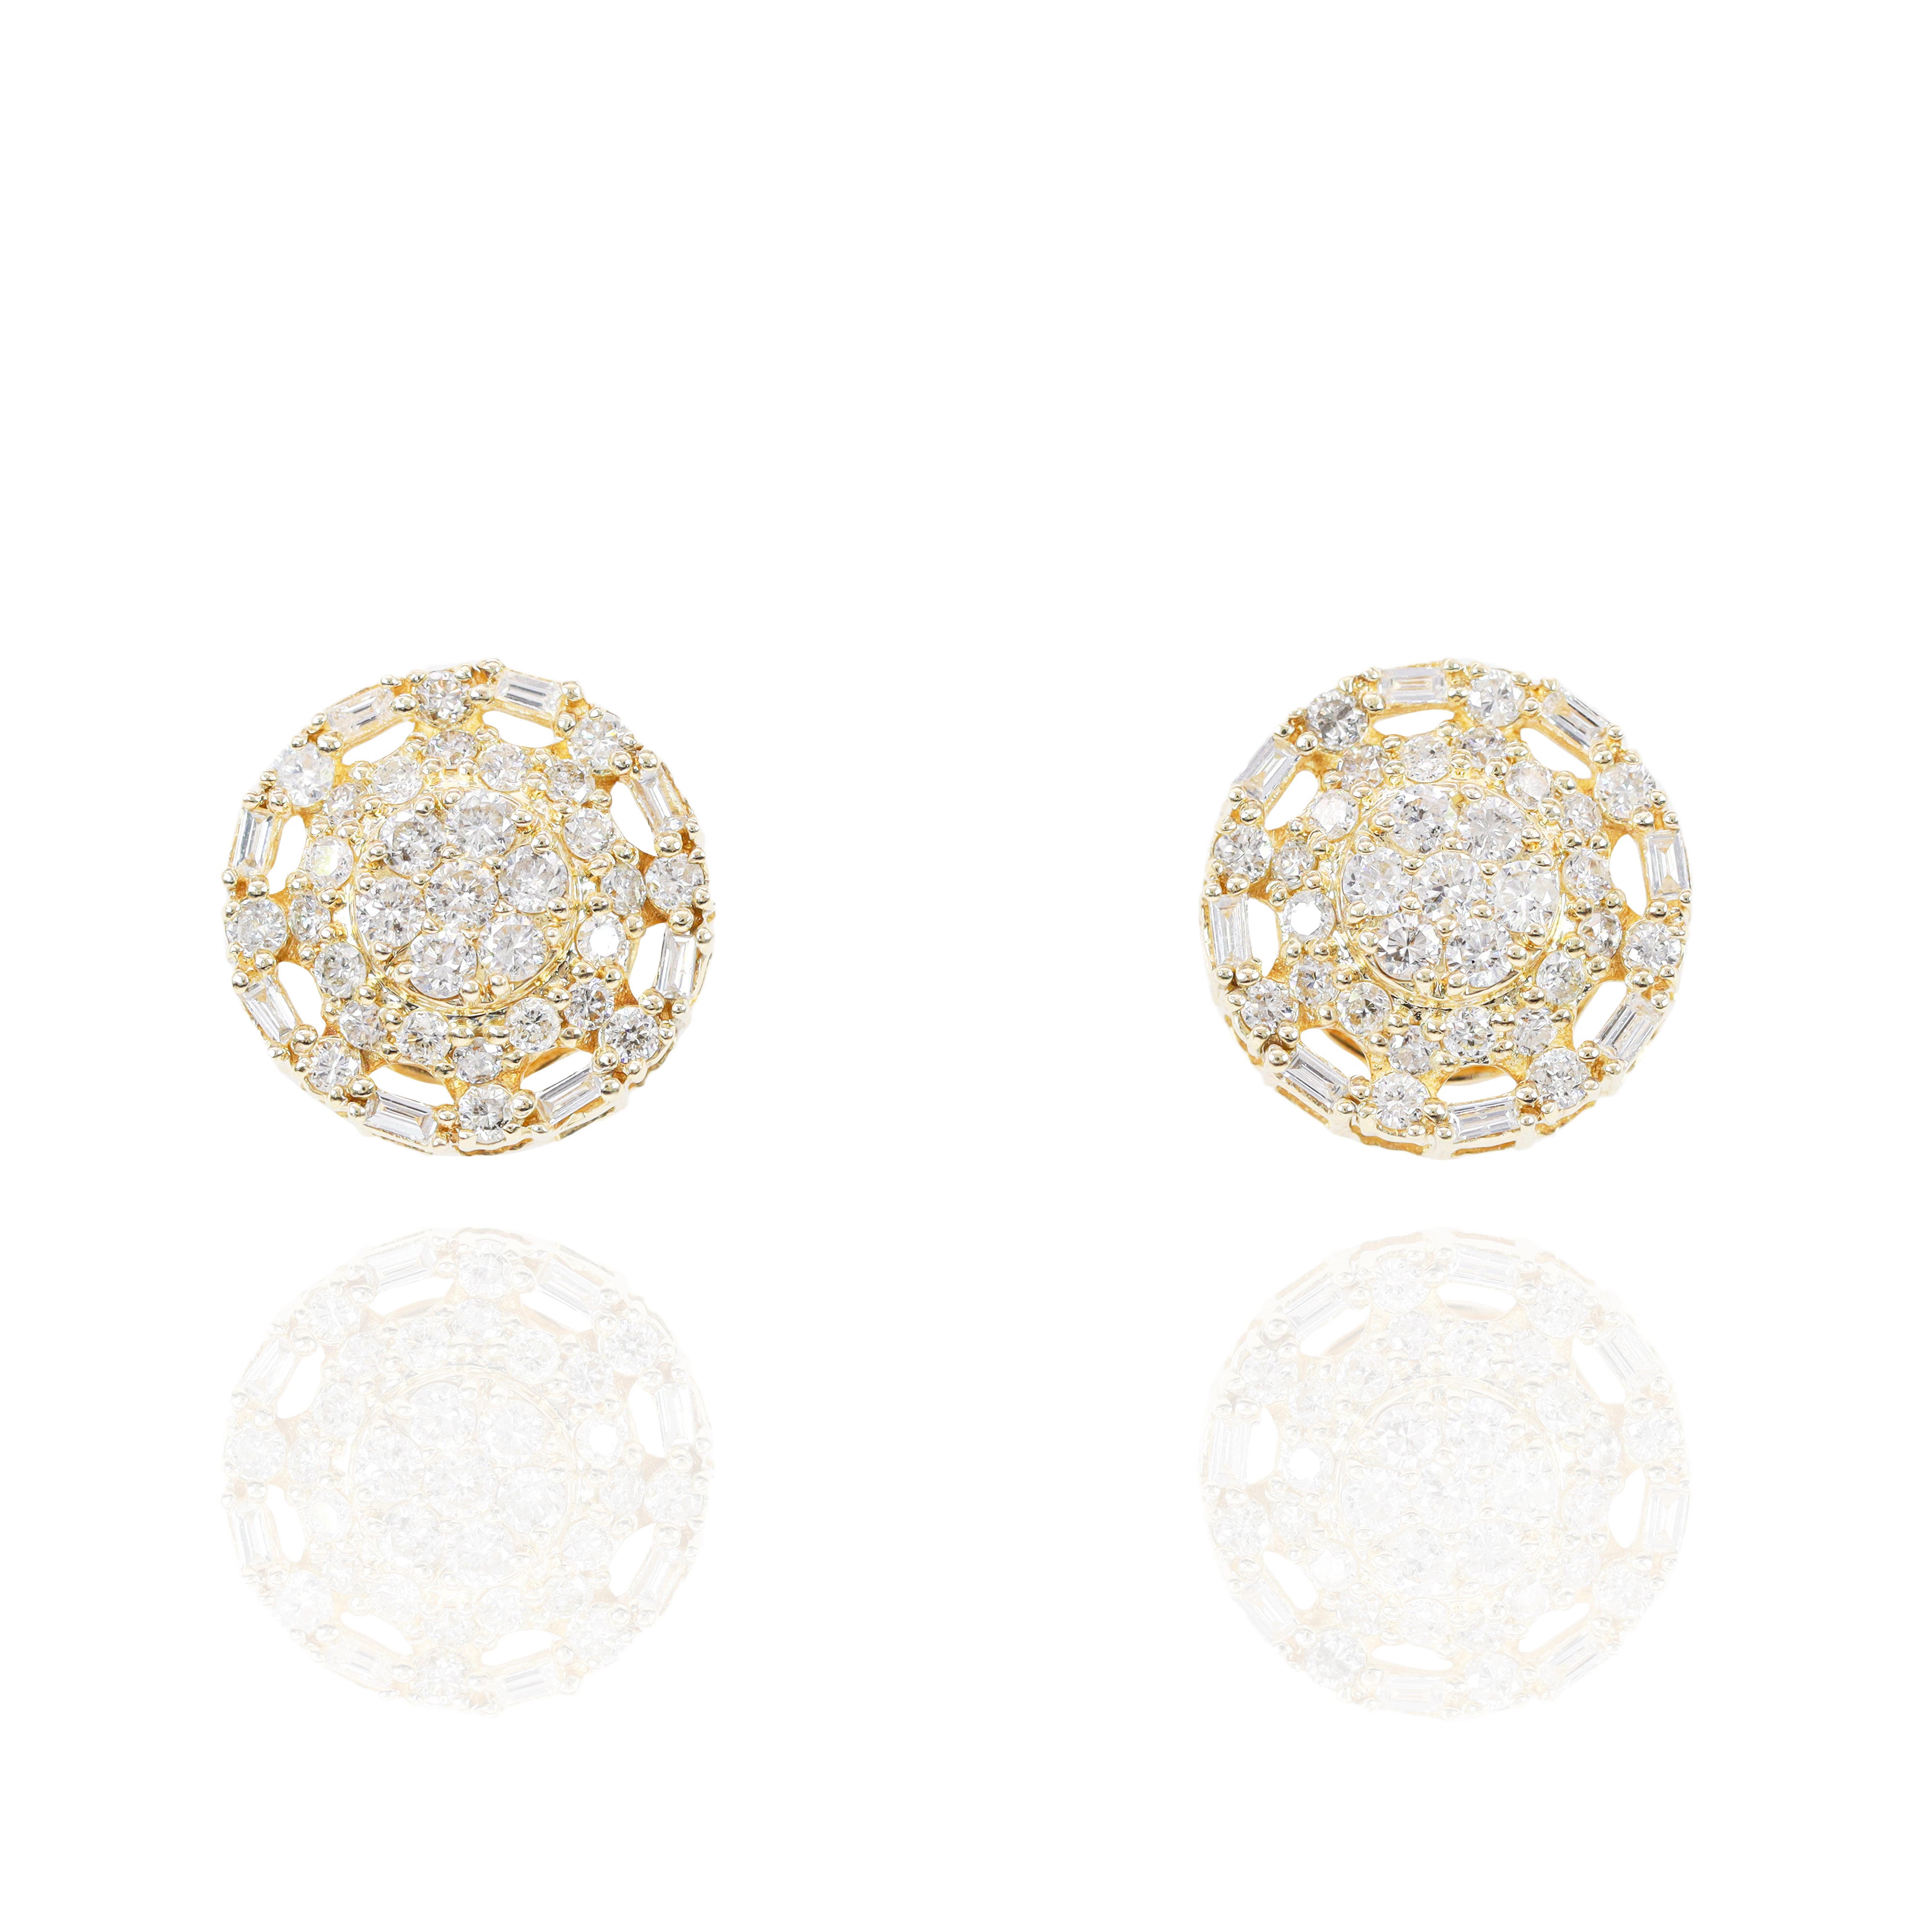 Round Cluster Diamond Earrings with Baguette Diamond Border